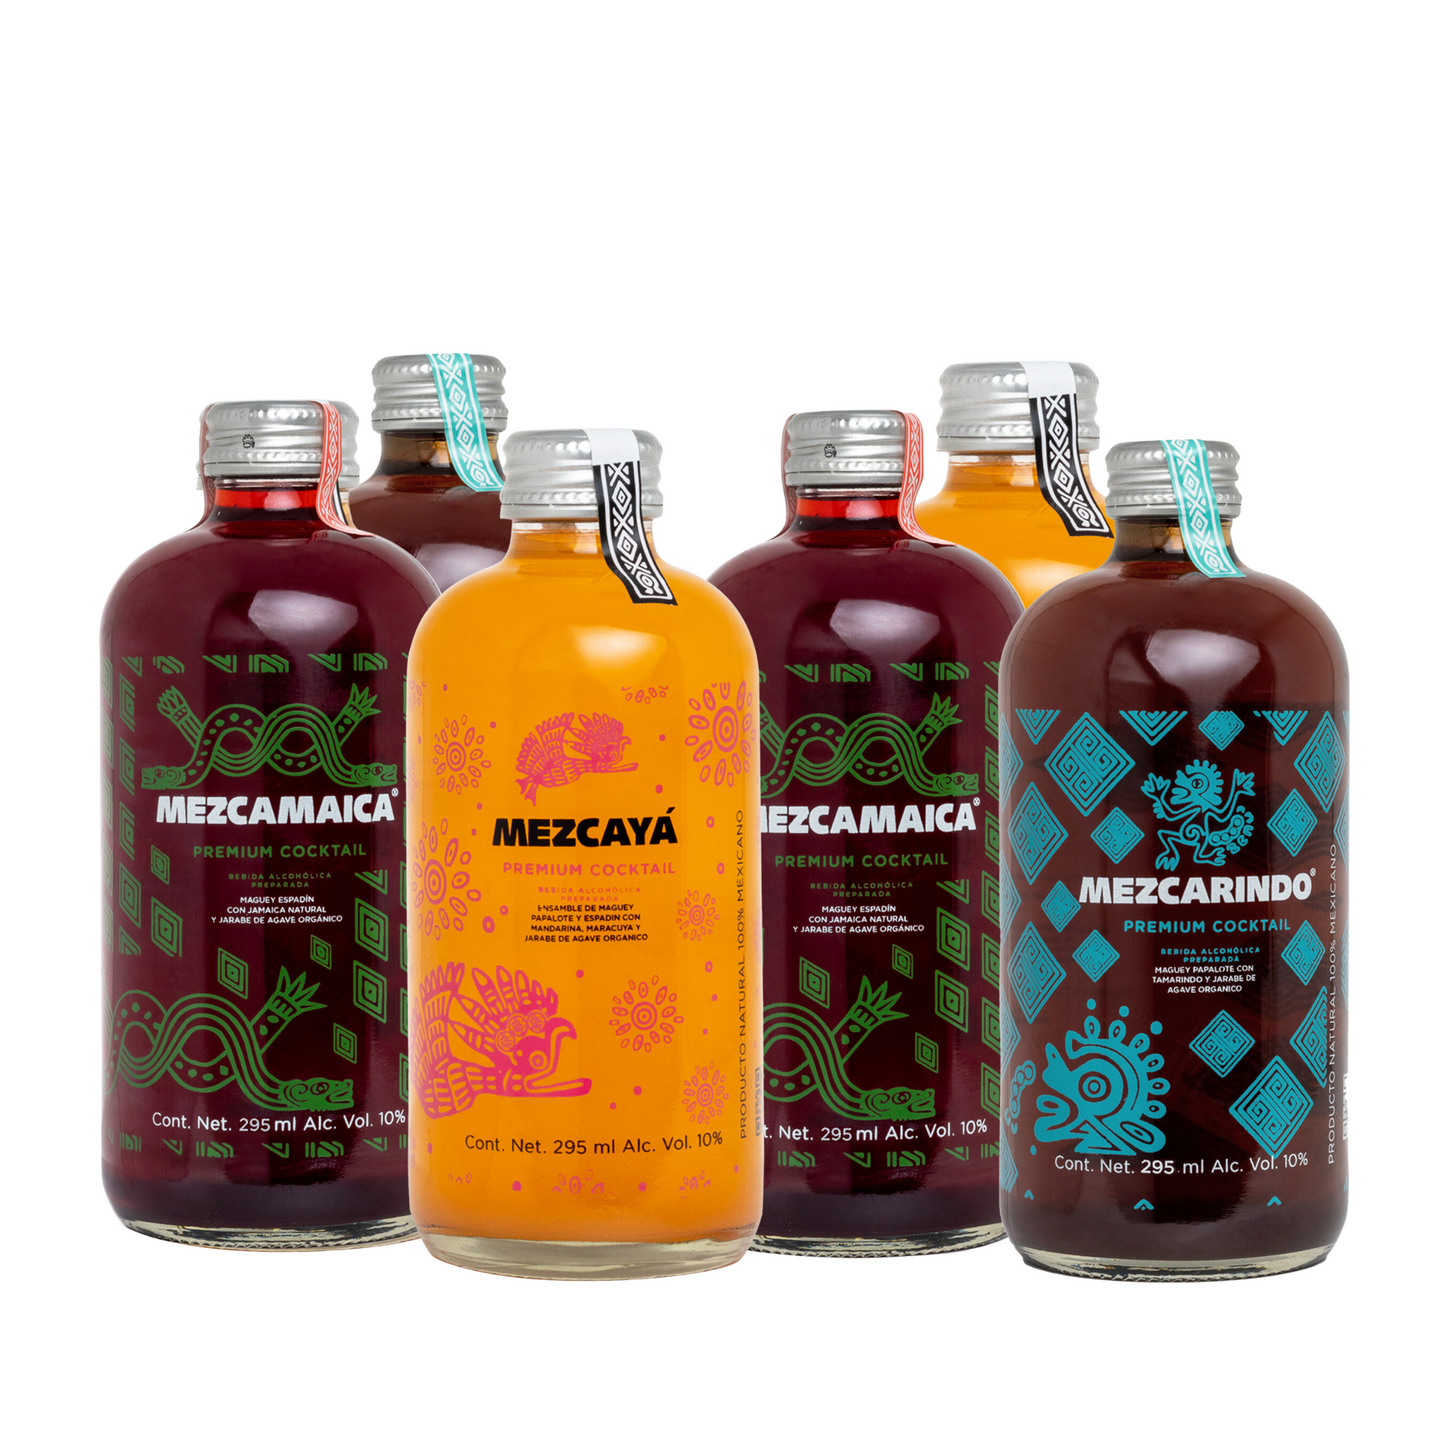 Mixed box 295 ml 2 Mezcamaica, 2 Mezcaya, 2 Mezcarindo 6 Premium Cocktail bottles